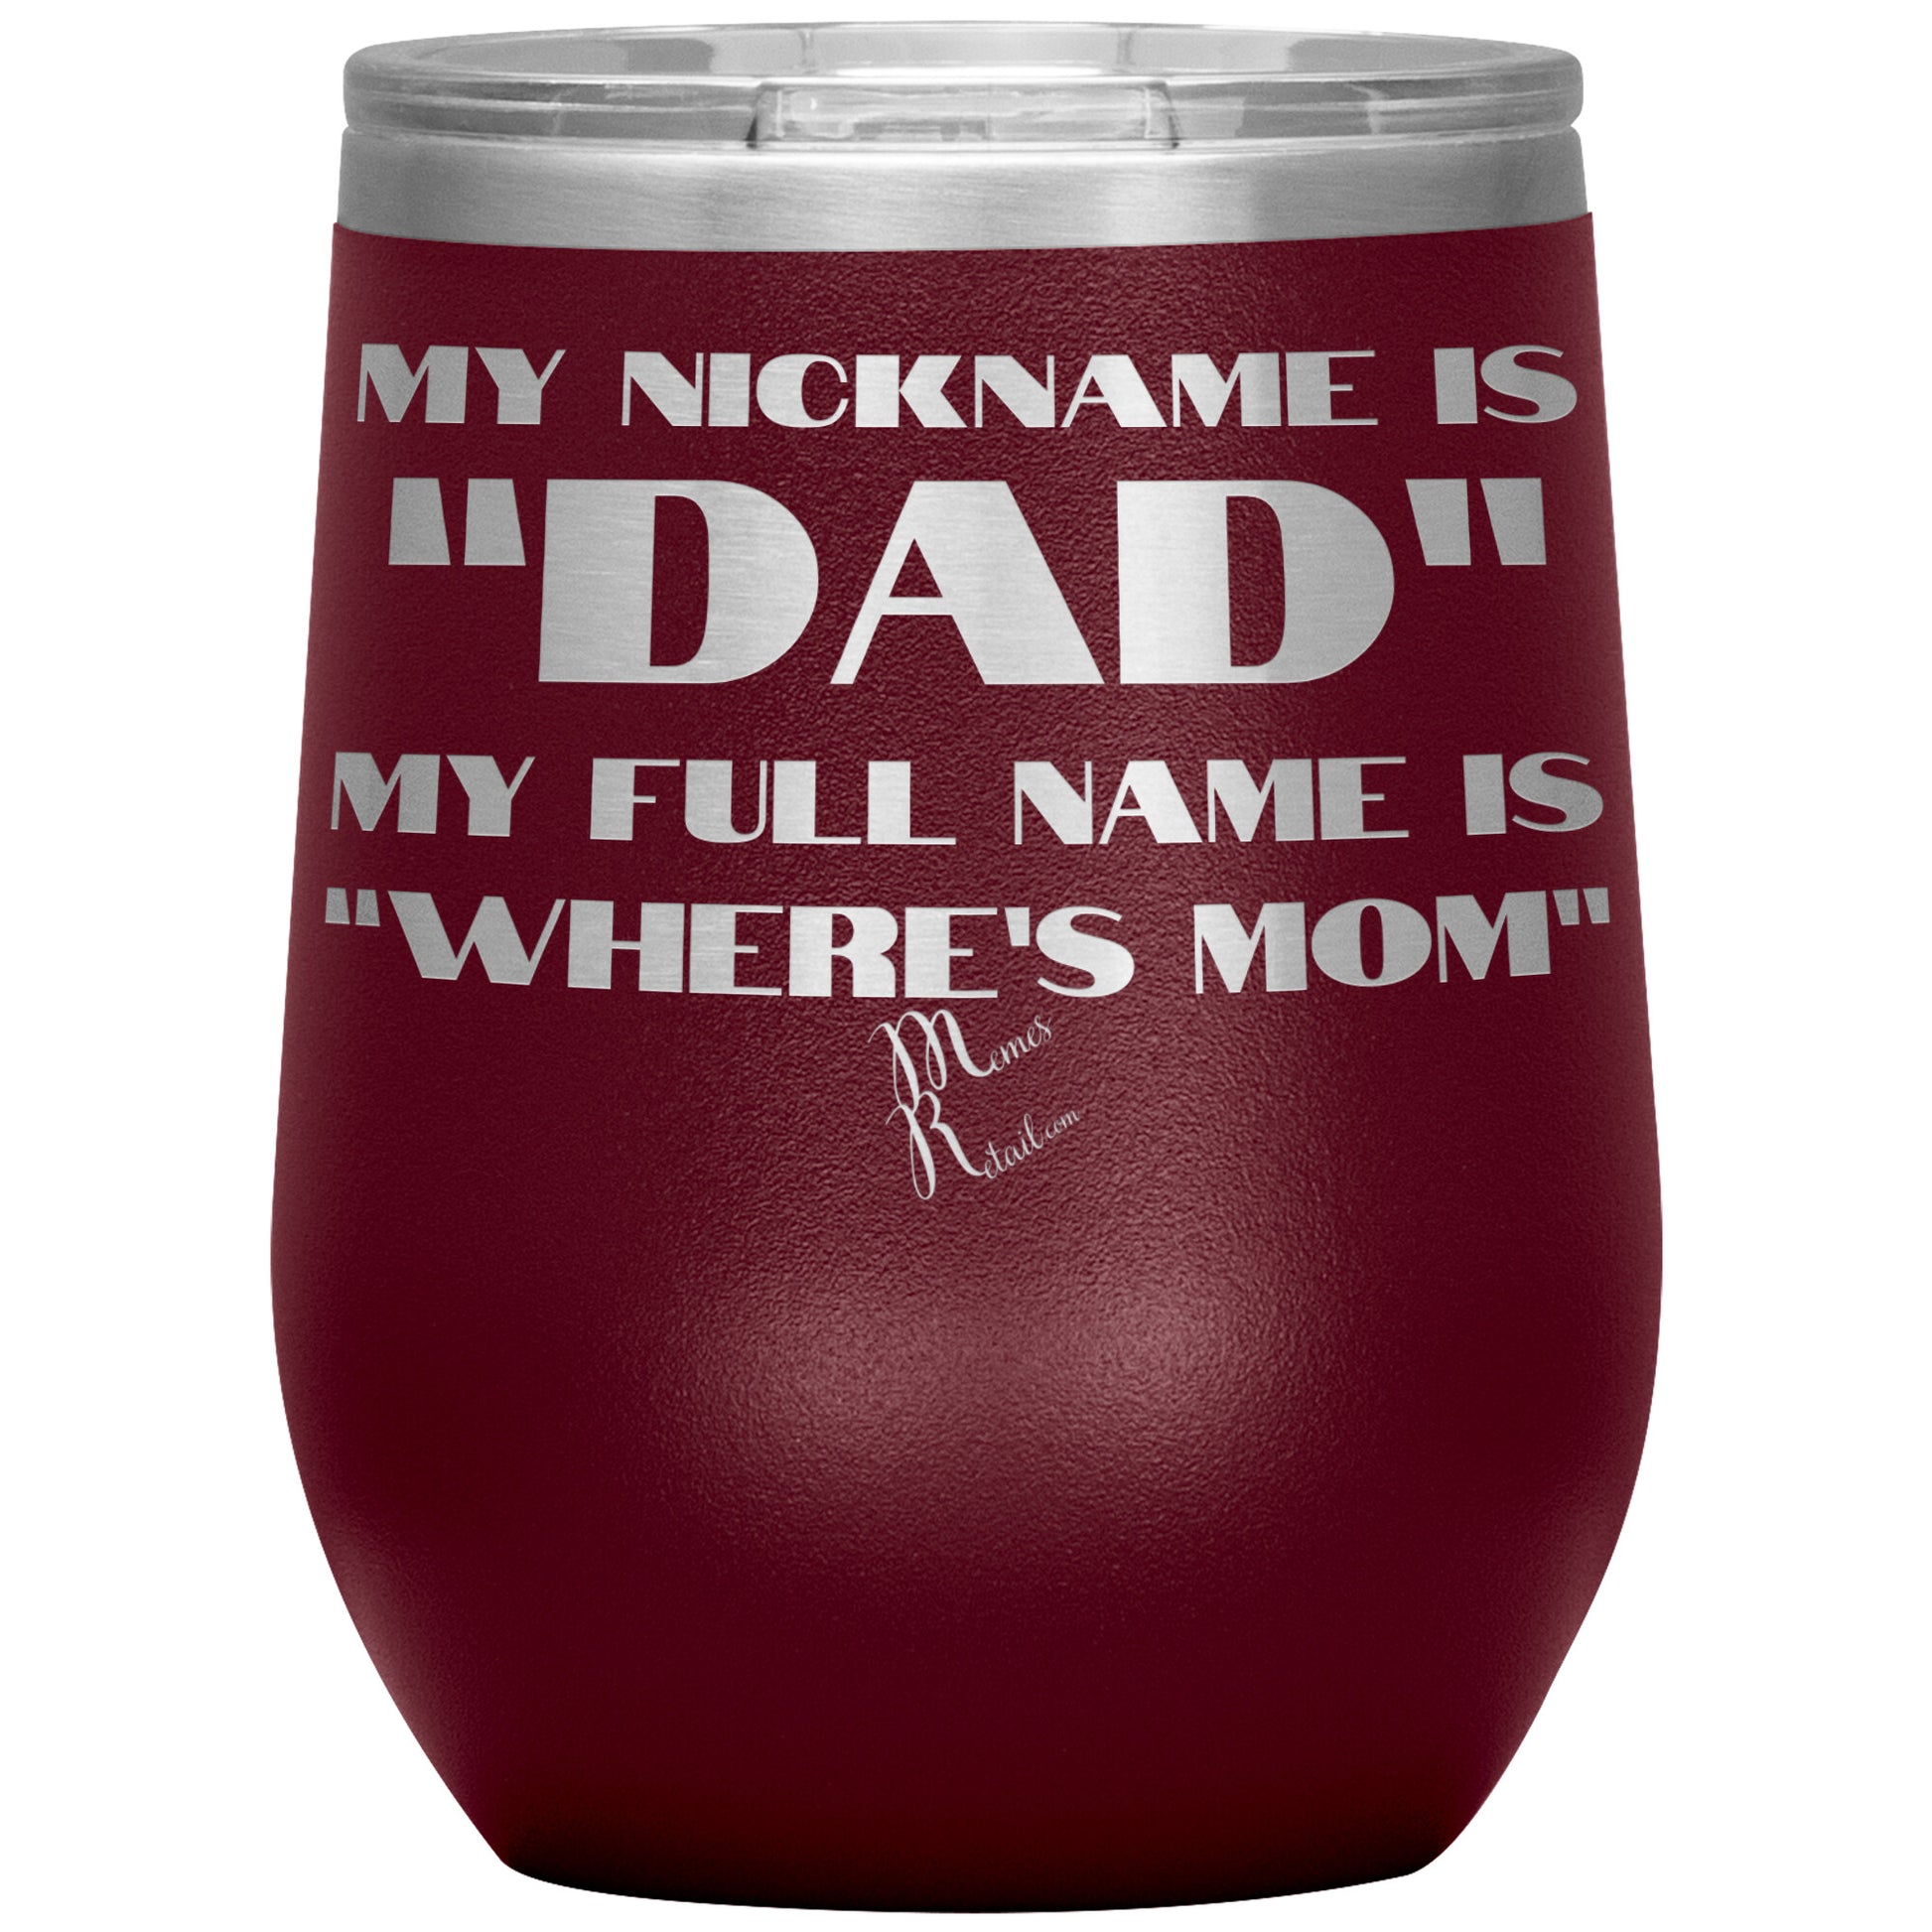 My Nickname is "Dad", My Full Name is "Where's Mom" Tumblers, 12oz Wine Insulated Tumbler / Maroon - MemesRetail.com